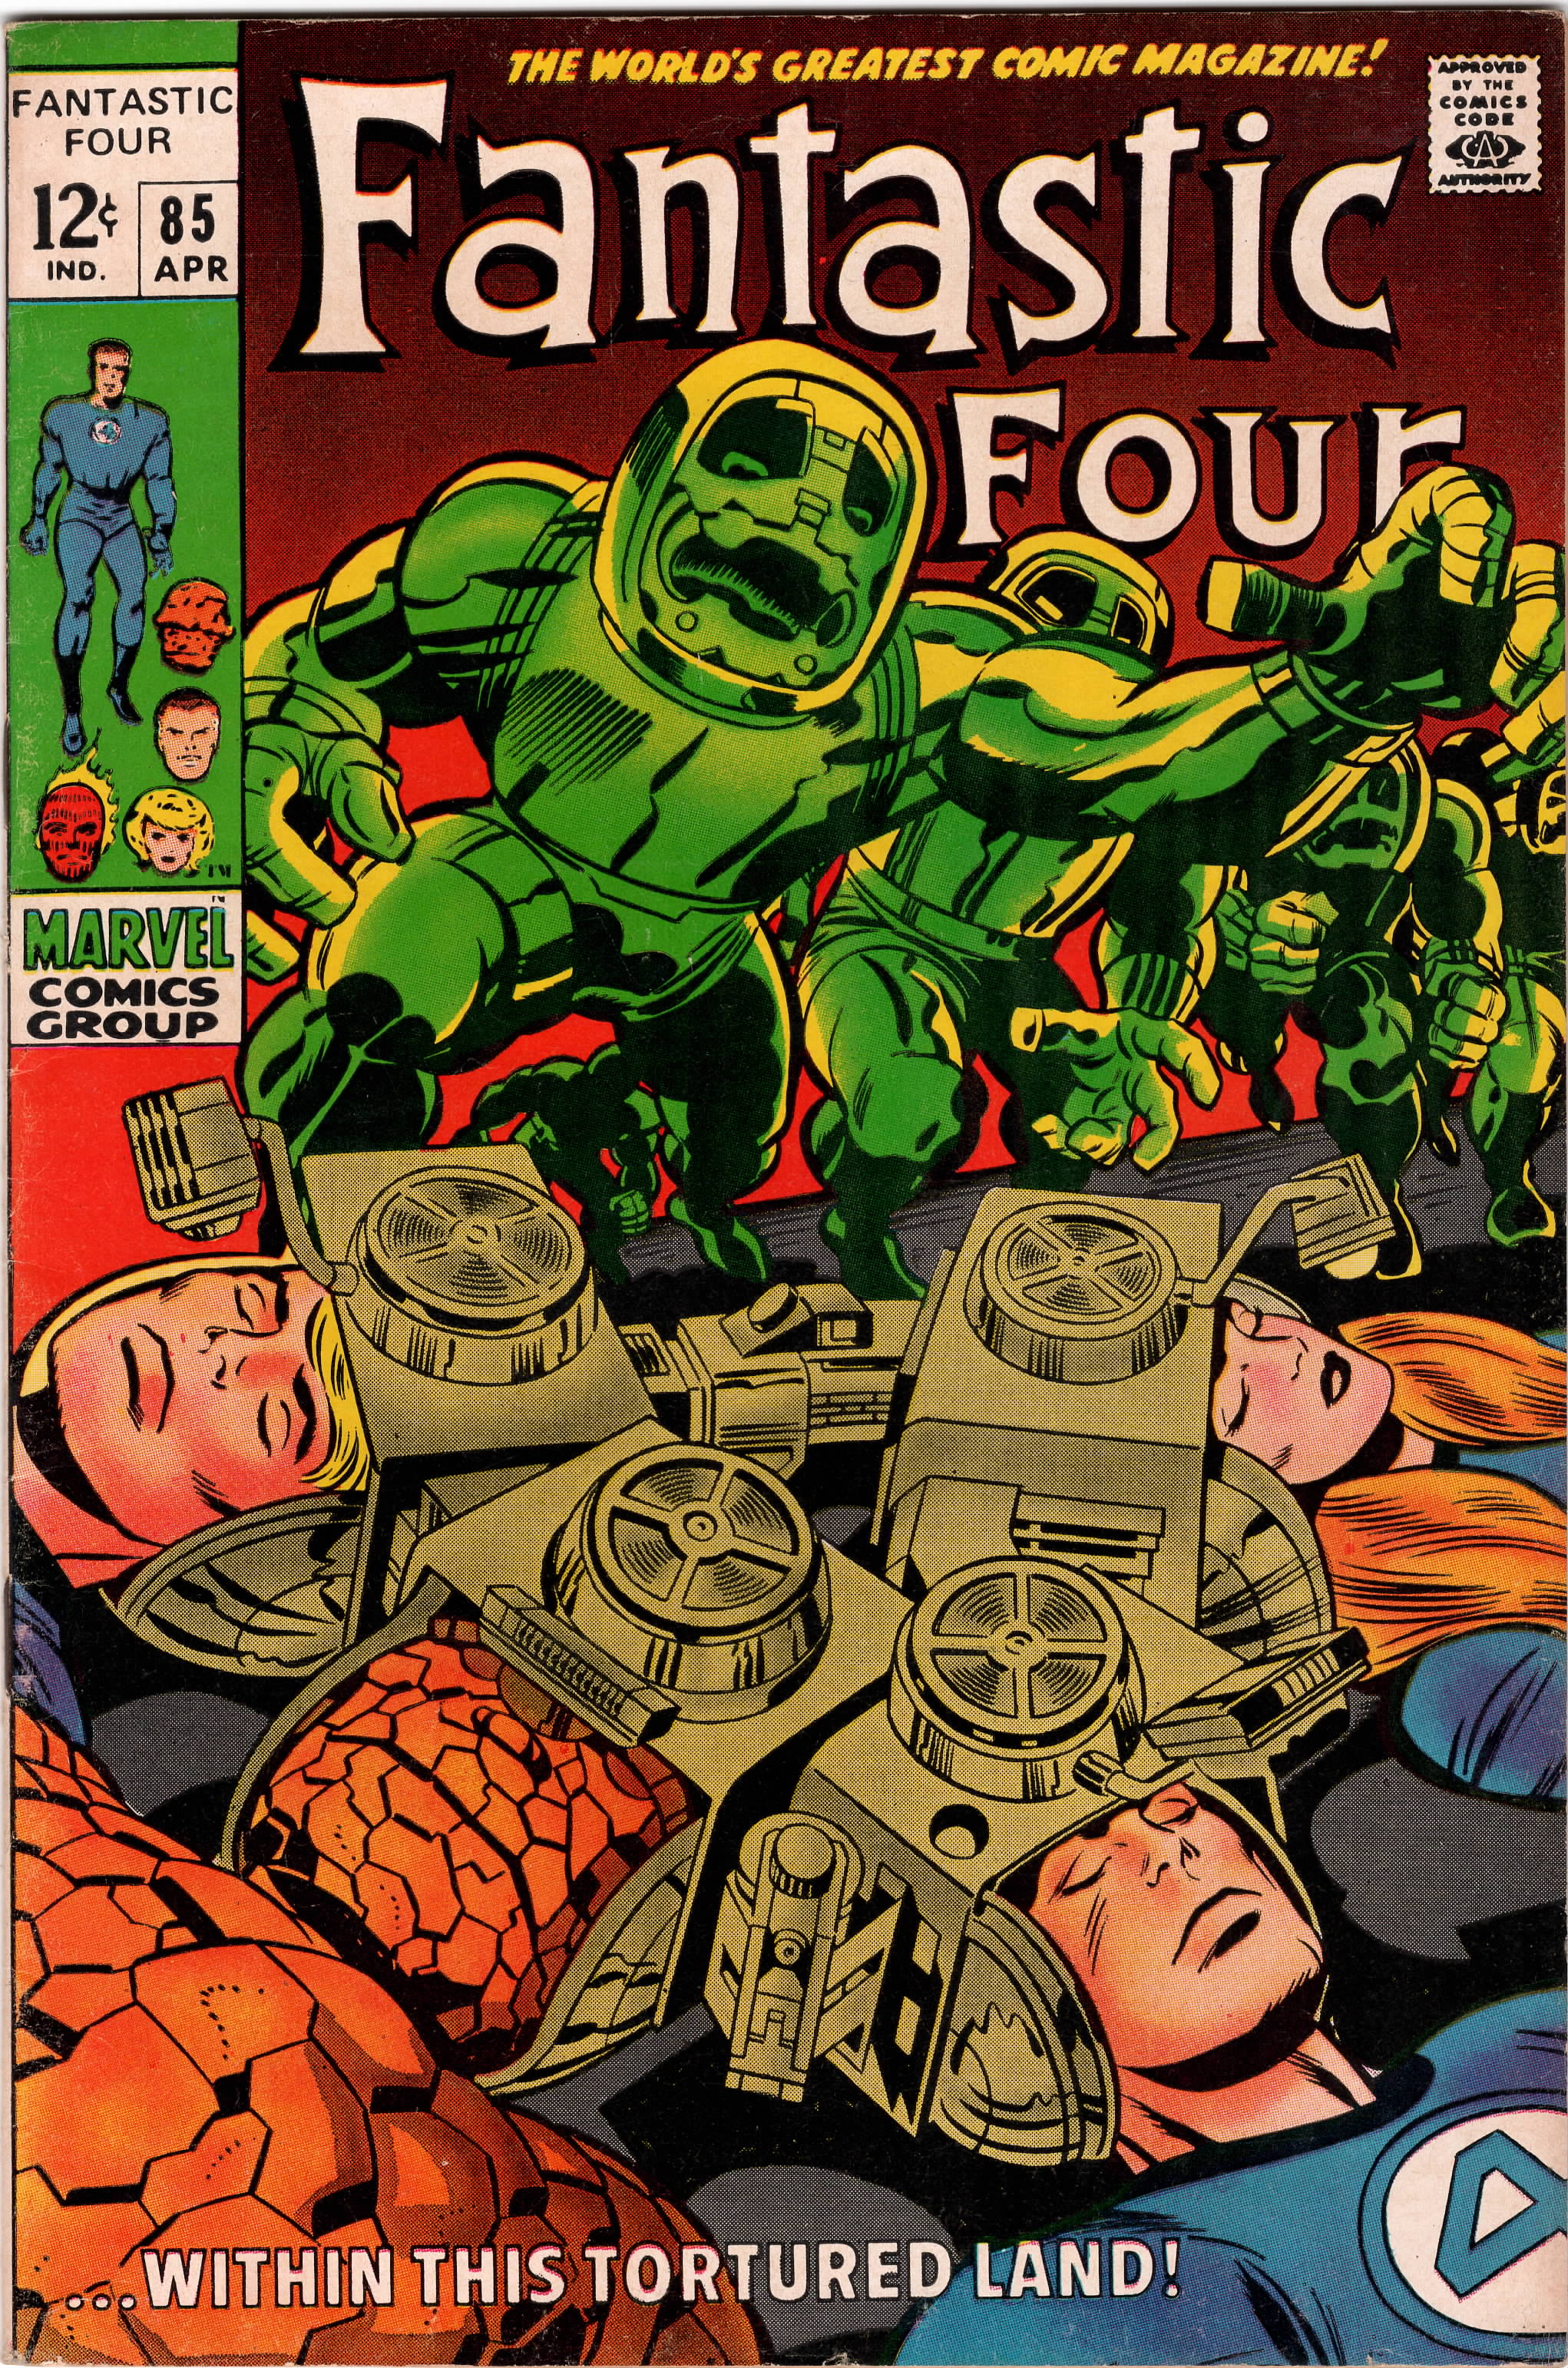 Fantastic Four #085